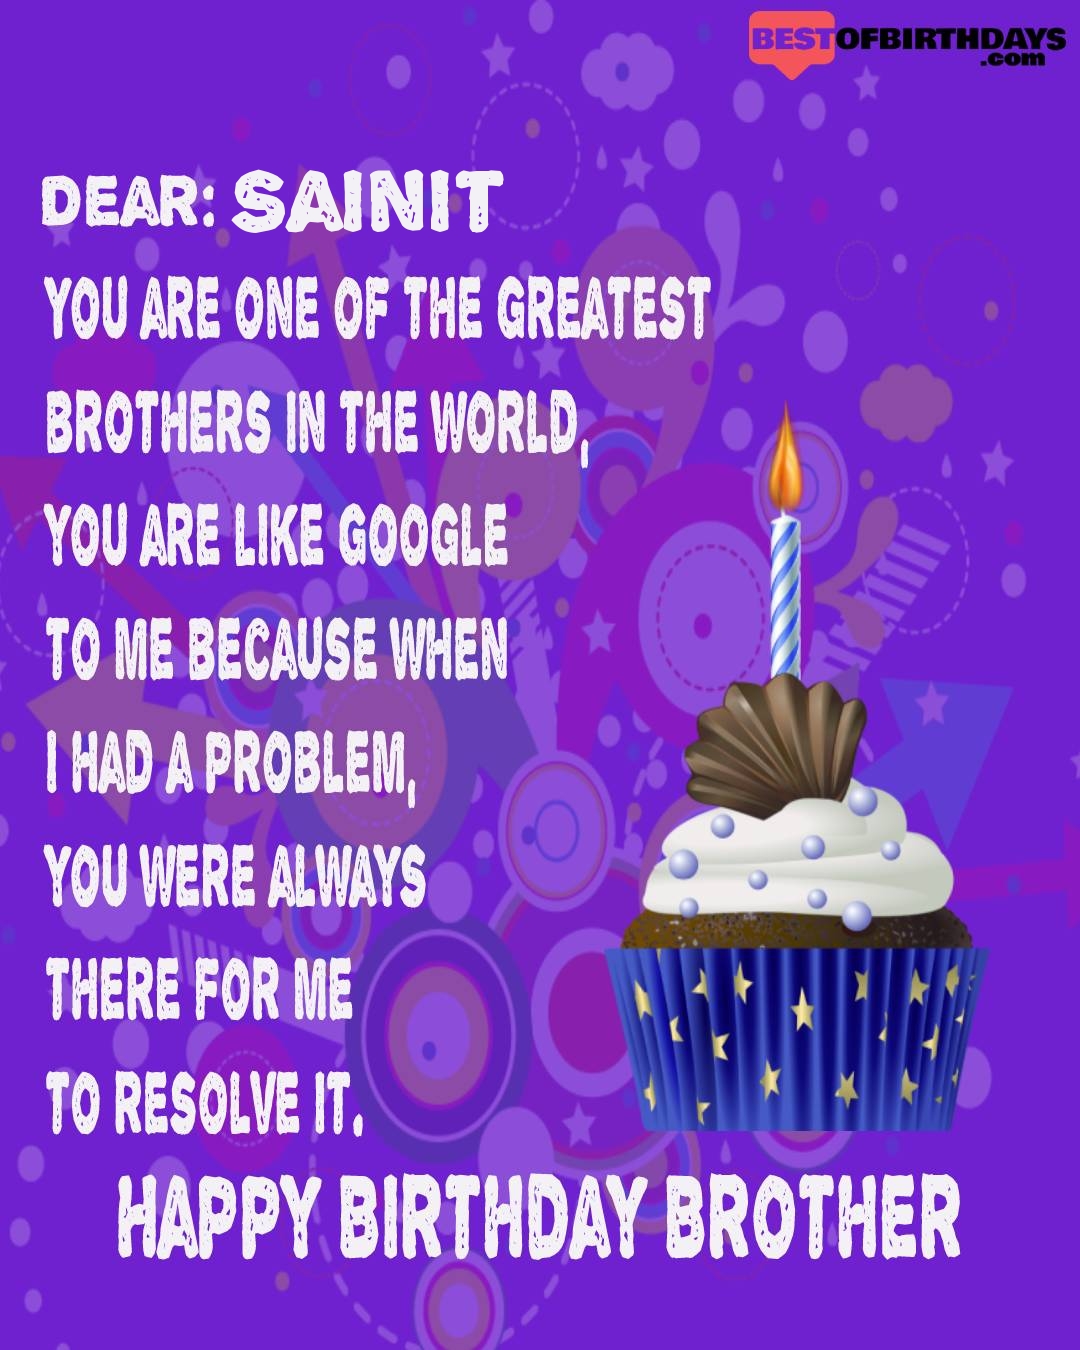 Happy birthday sainit bhai brother bro